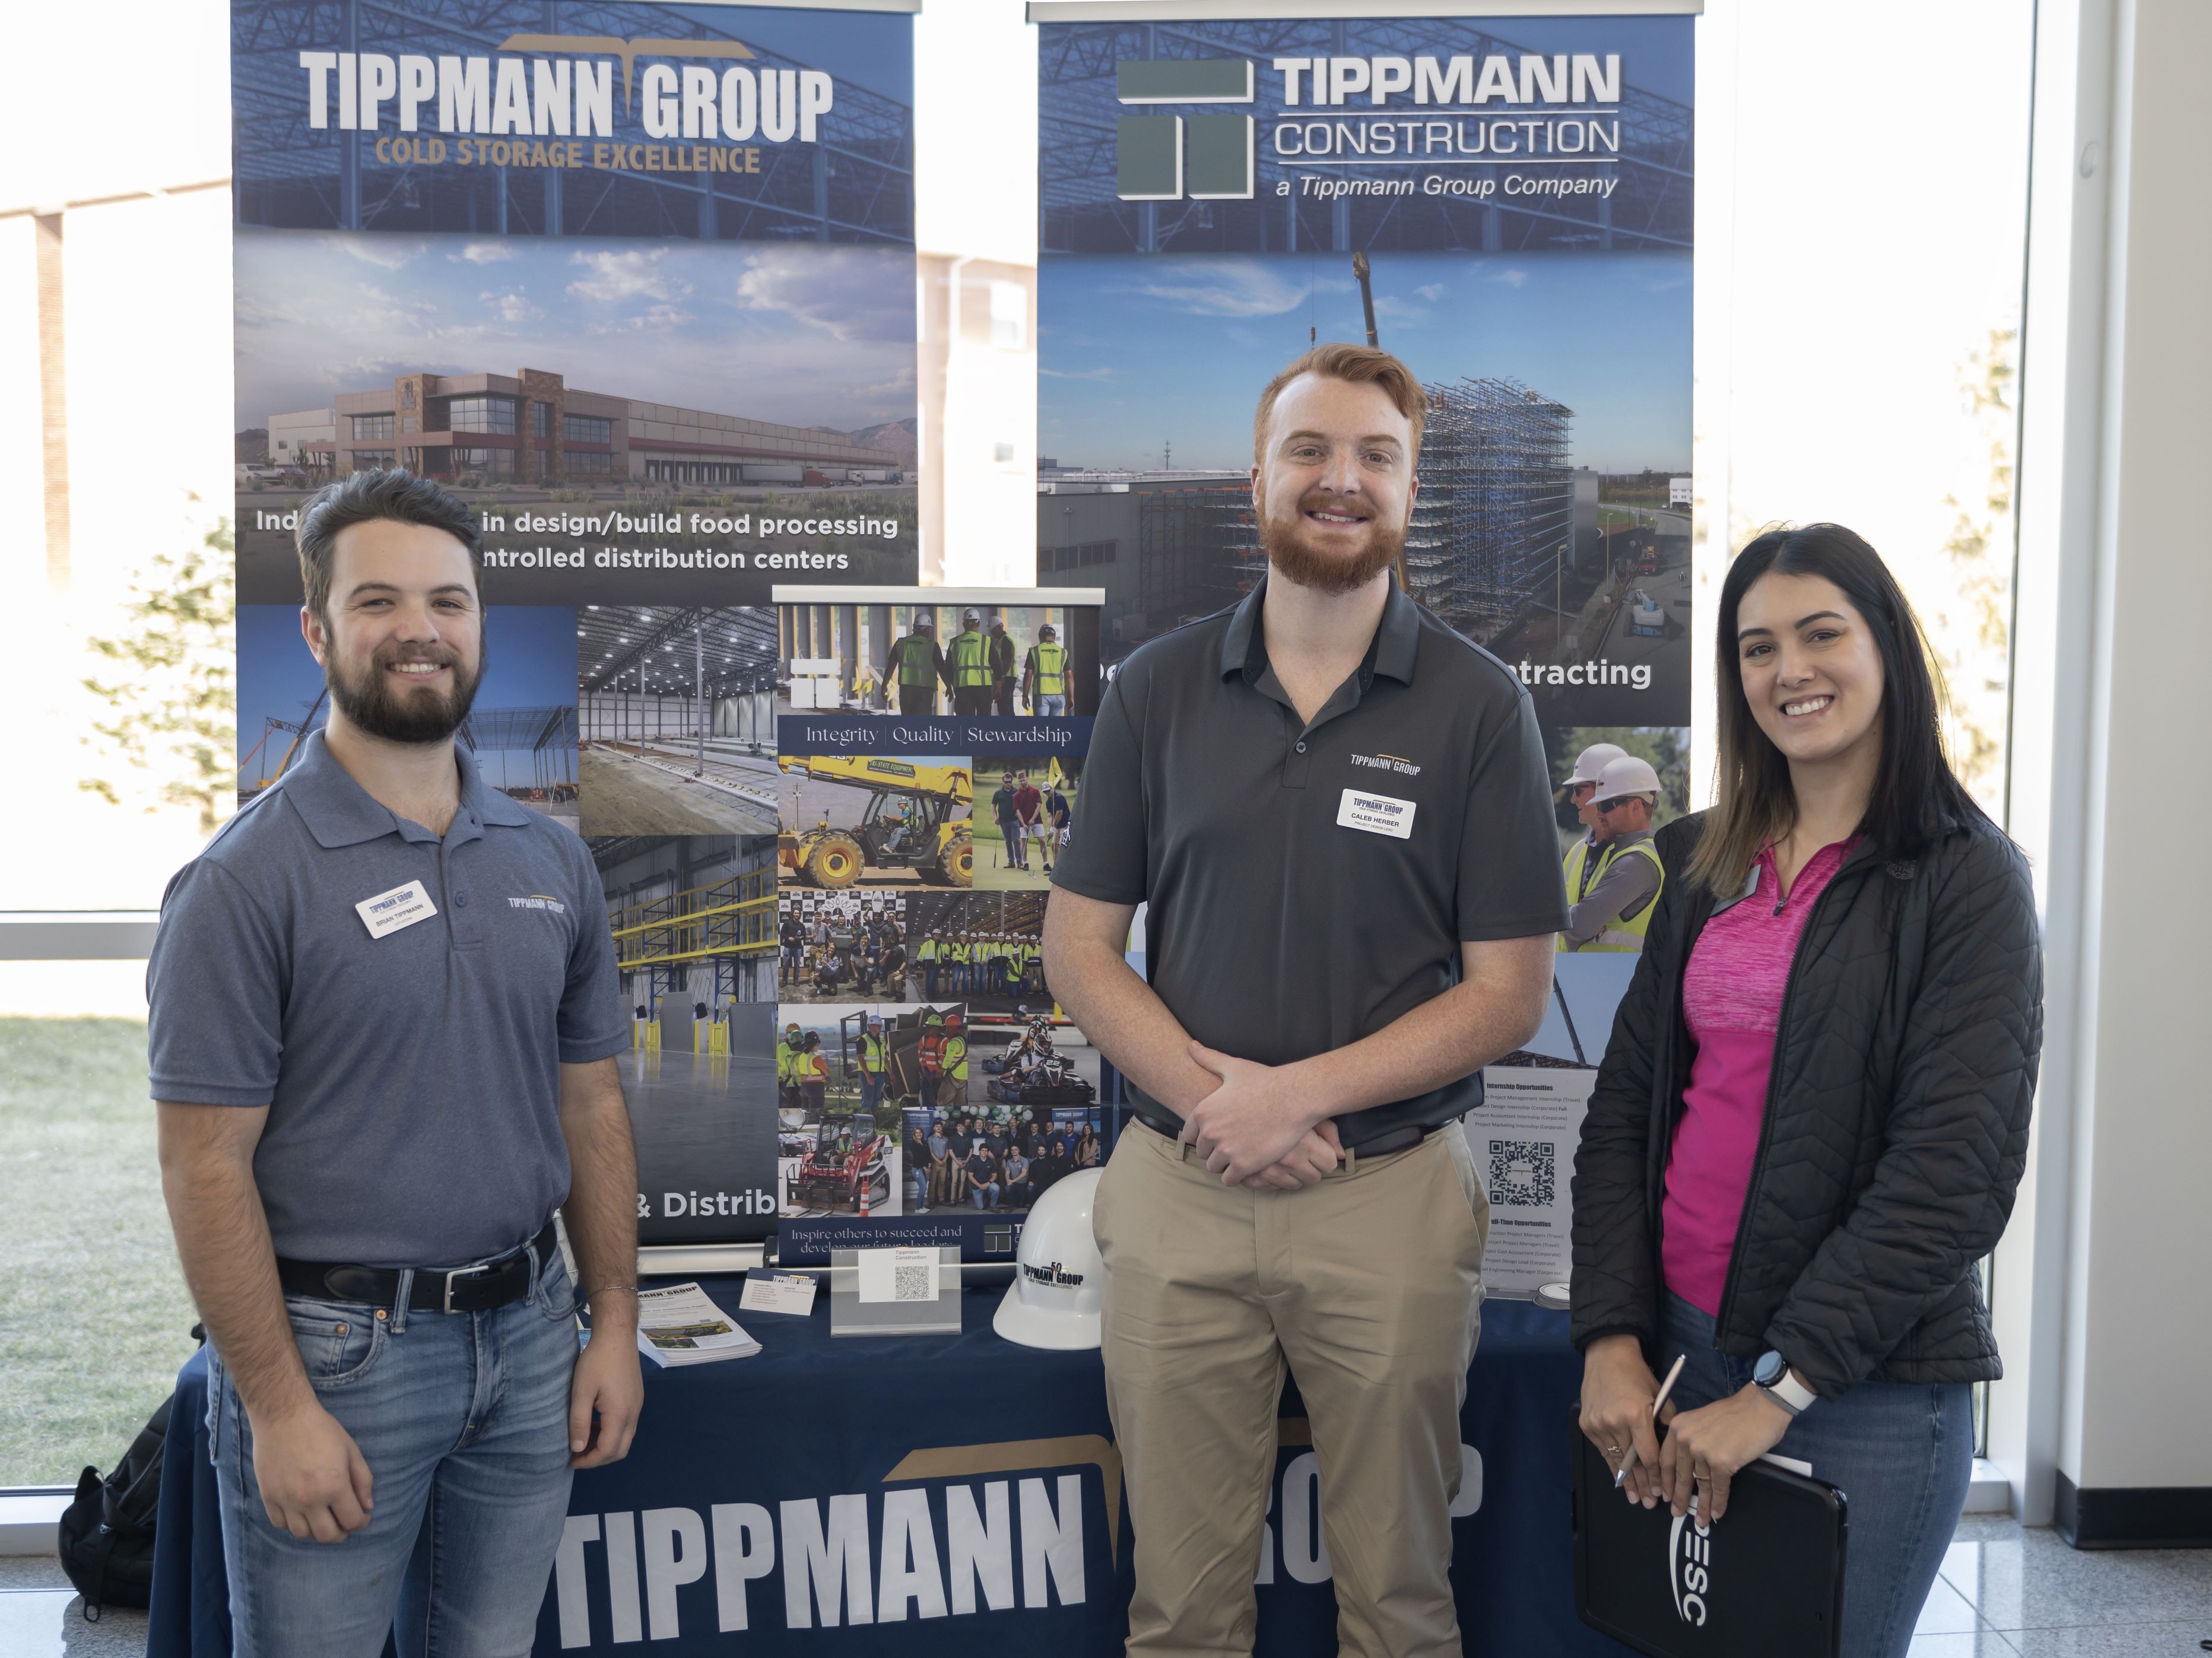 Tippman group career fair